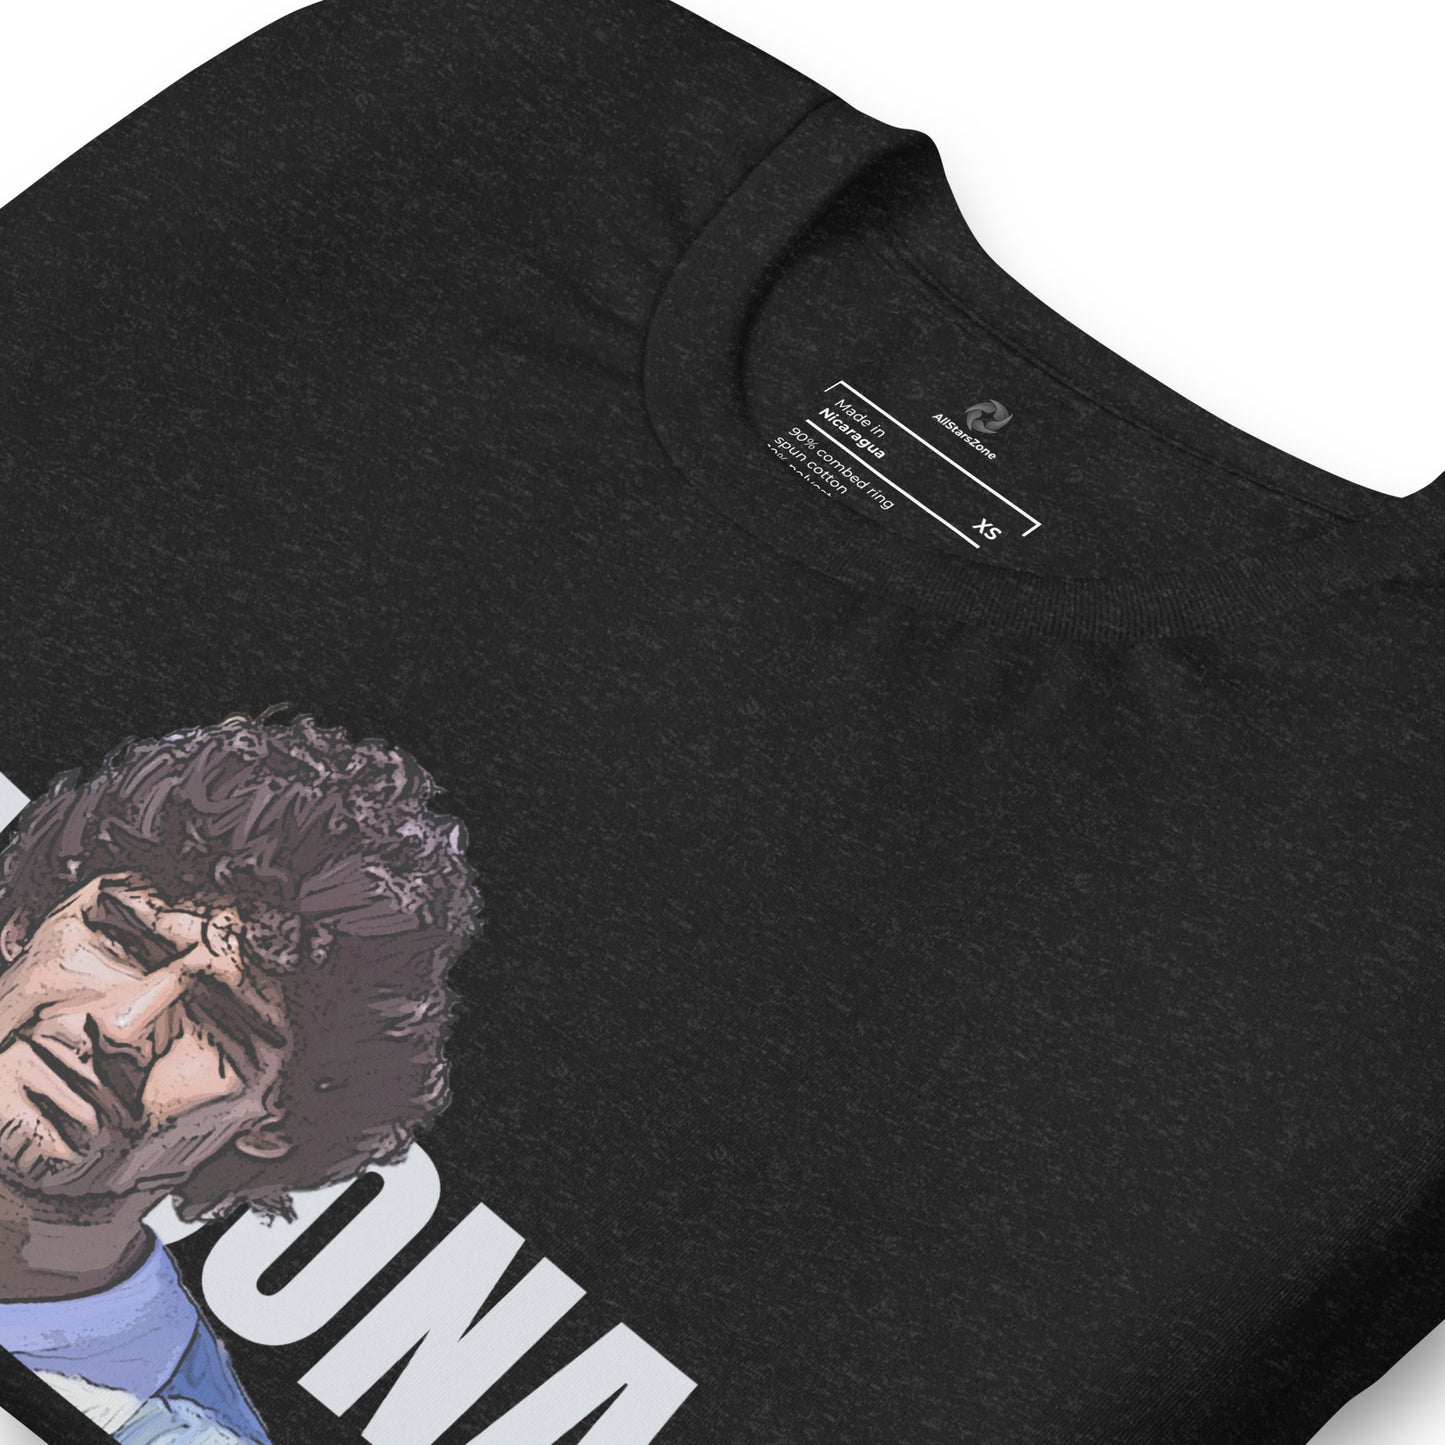 Maradona Unisex t-shirt